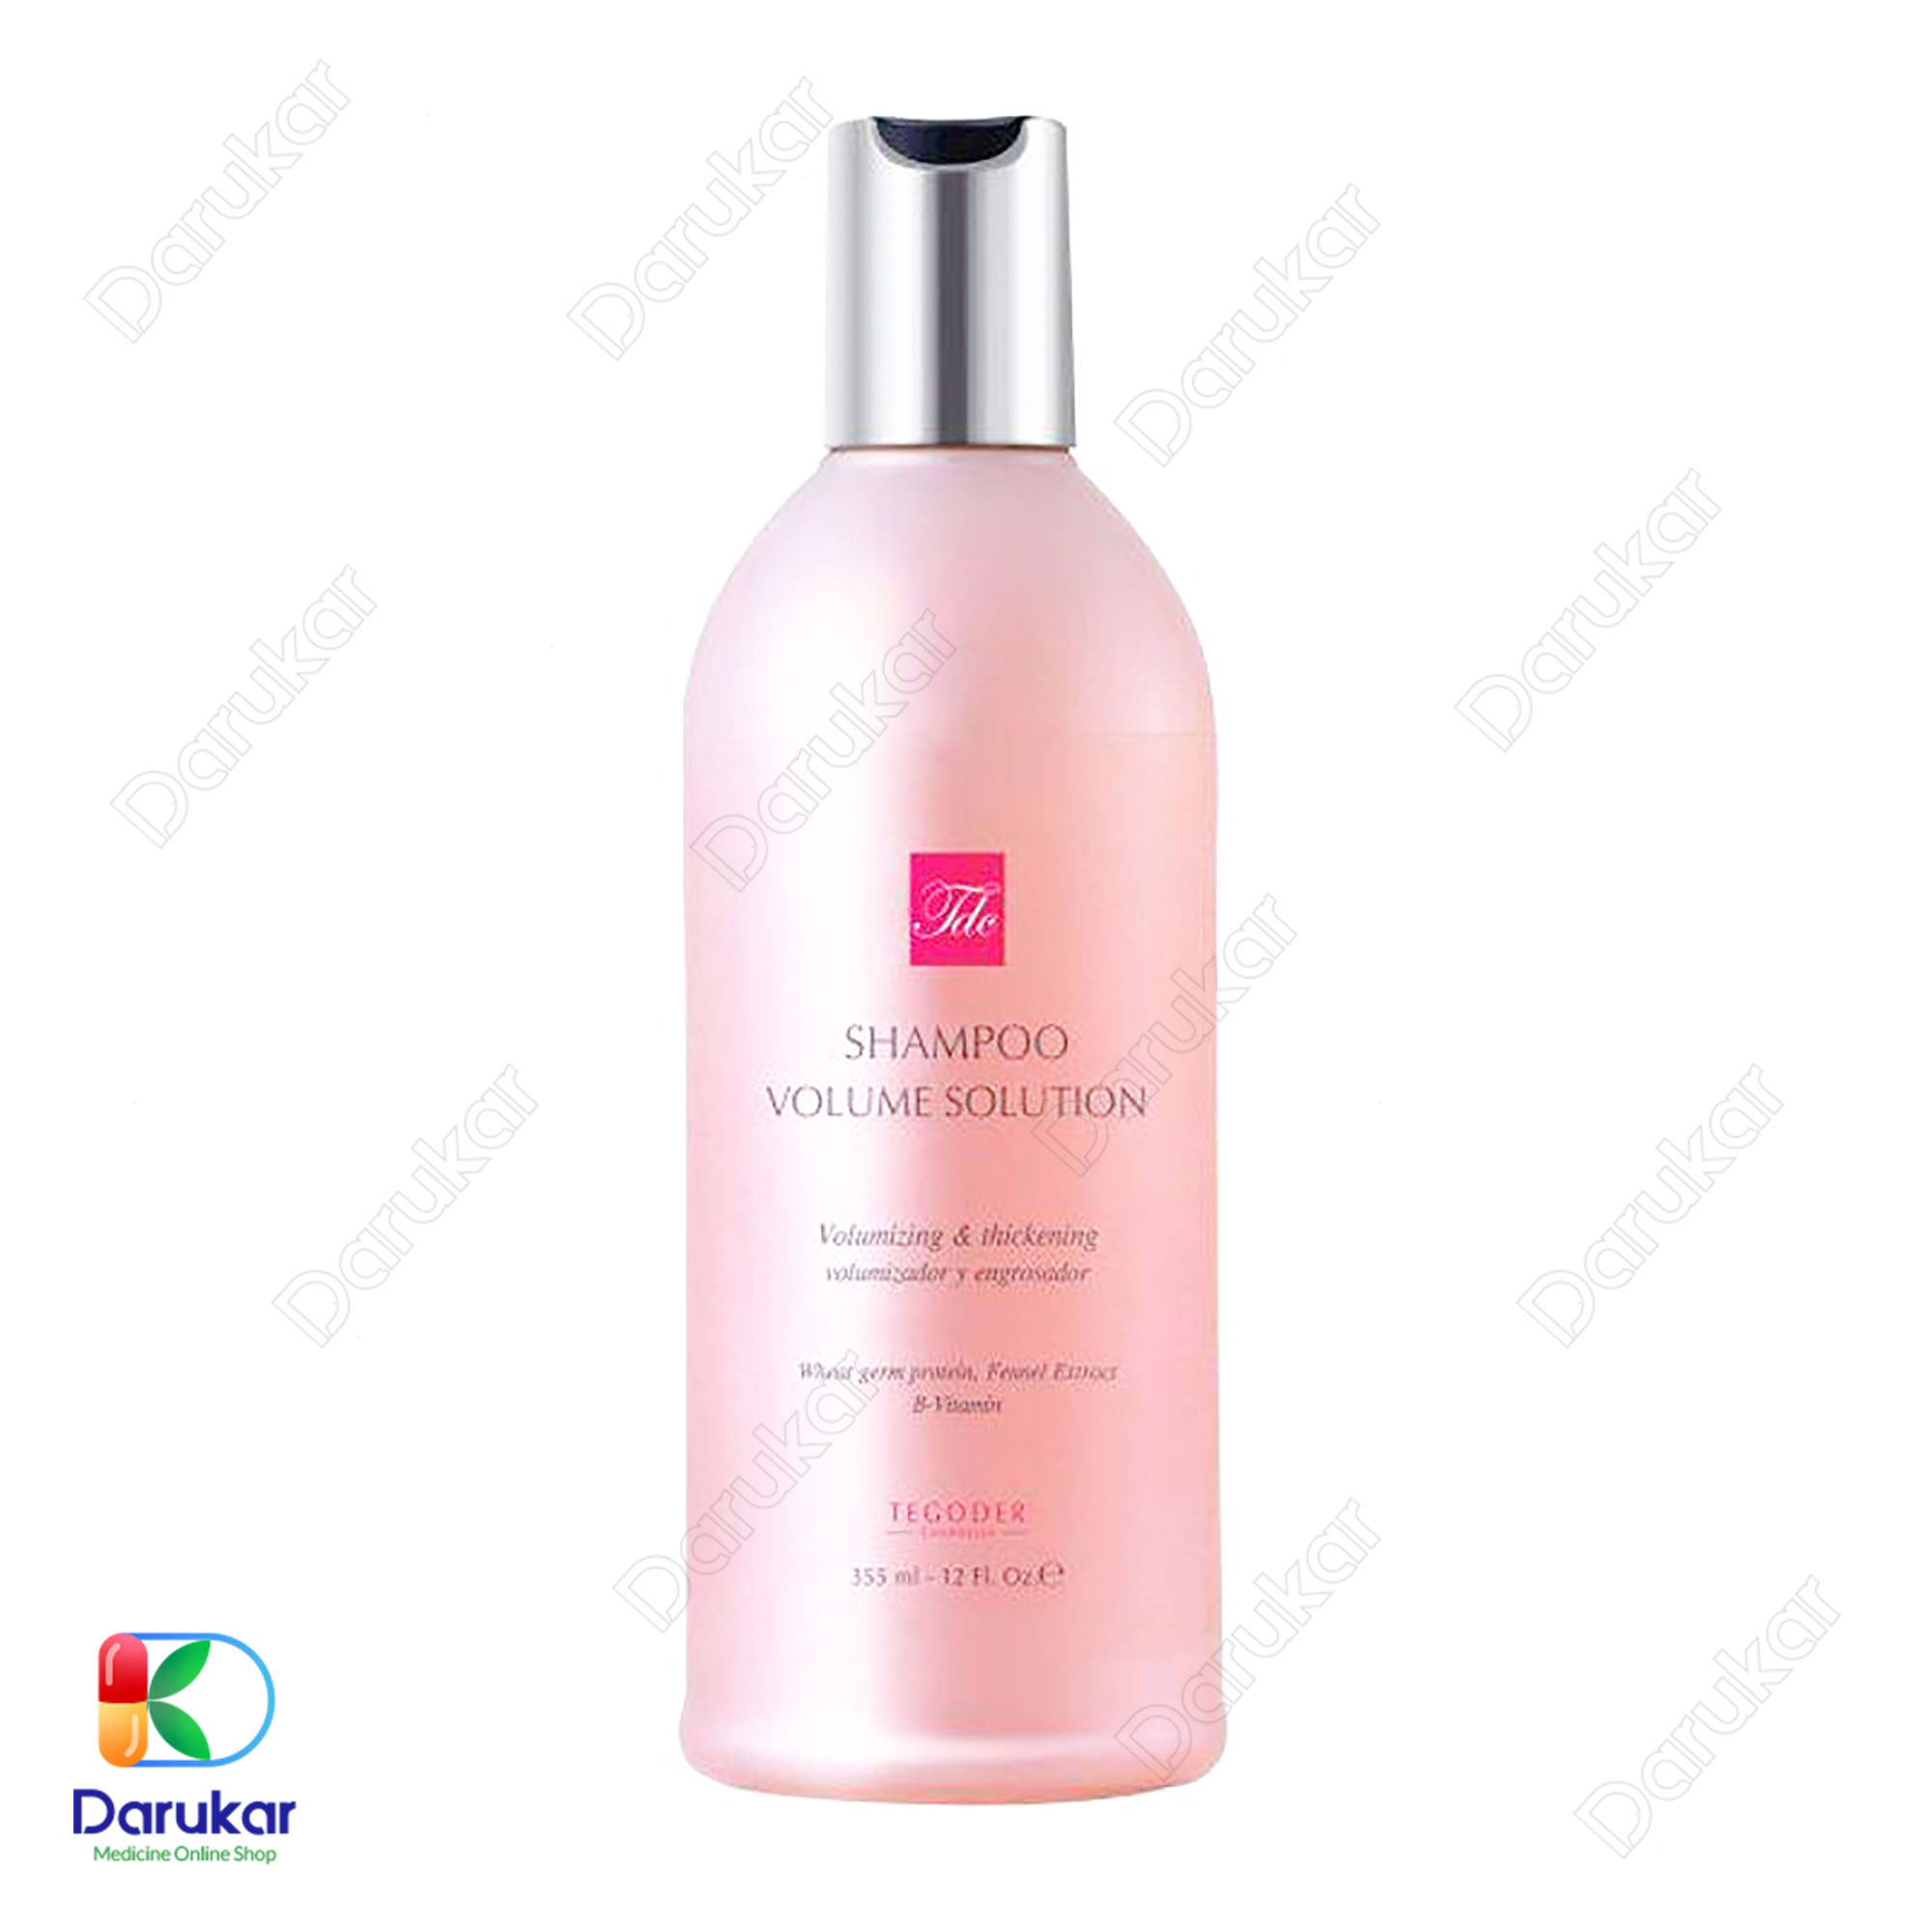 Tegoder Volume Solution shampoo 355 ml 1